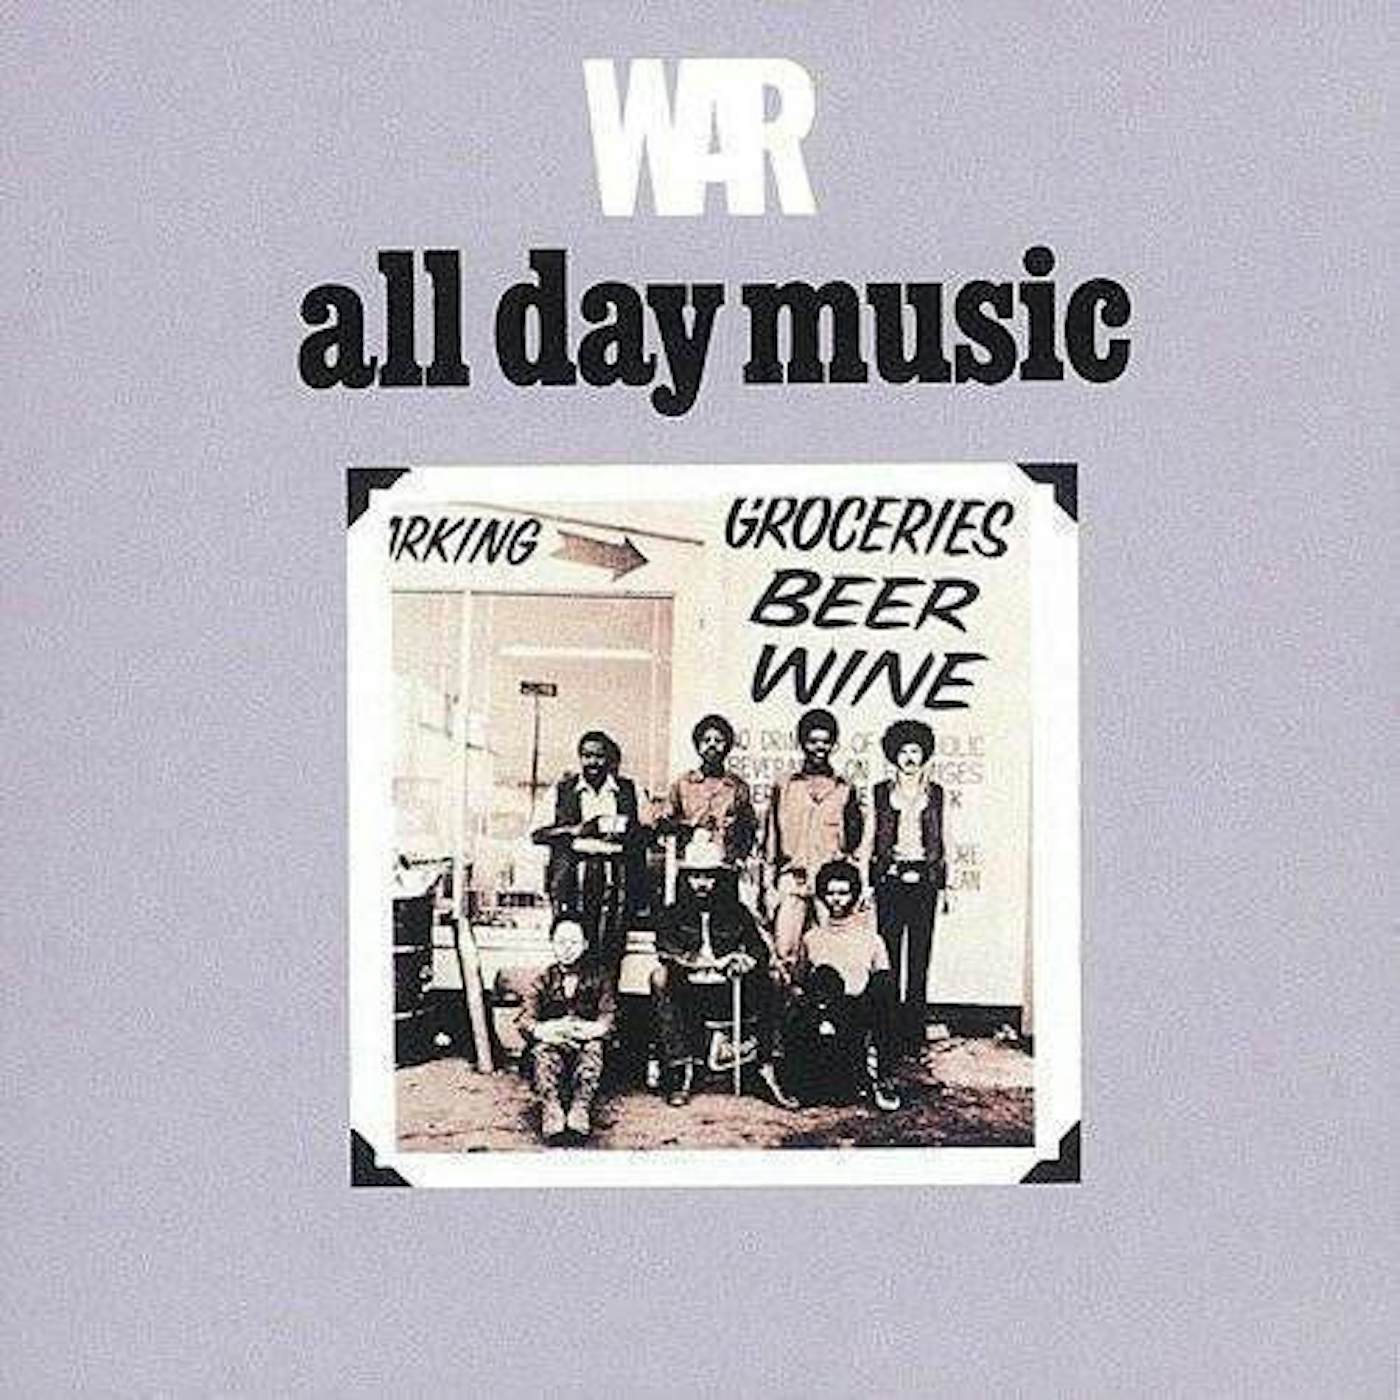 War All Day Music Vinyl Record